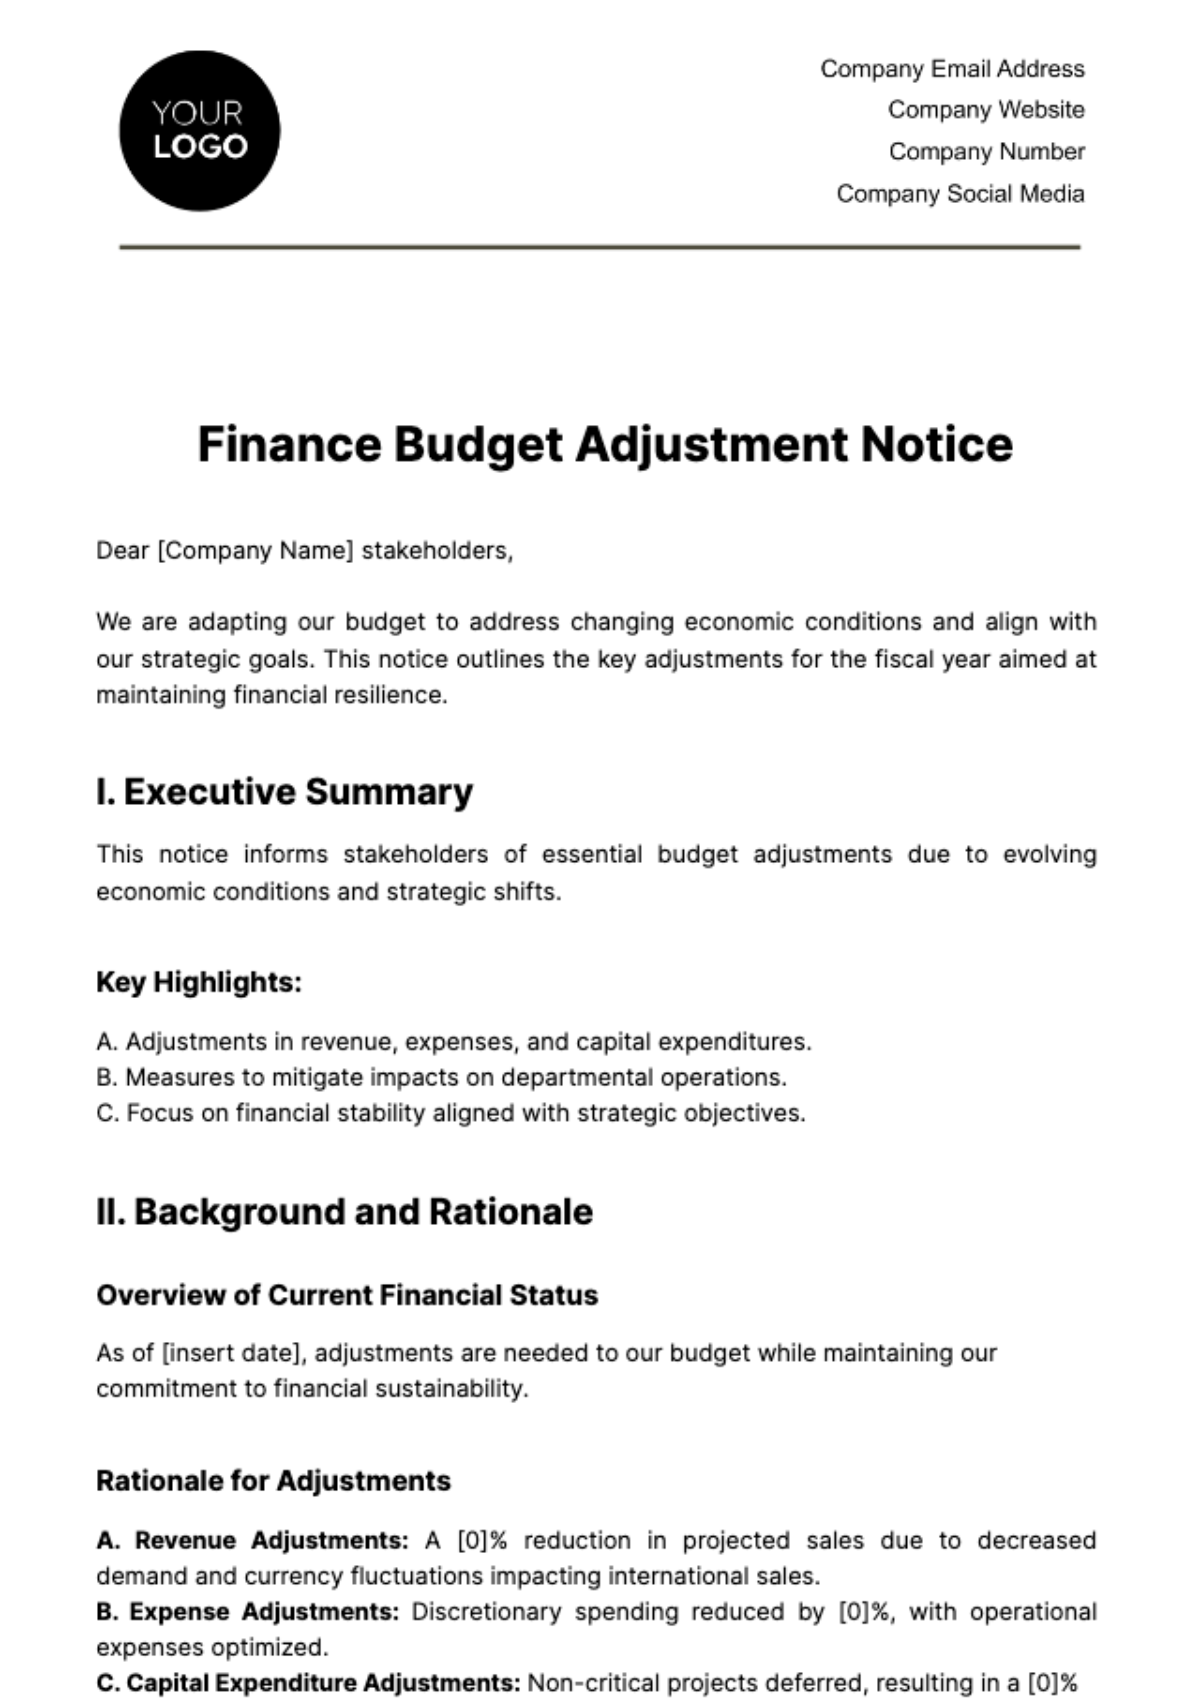 Finance Budget Adjustment Notice Template